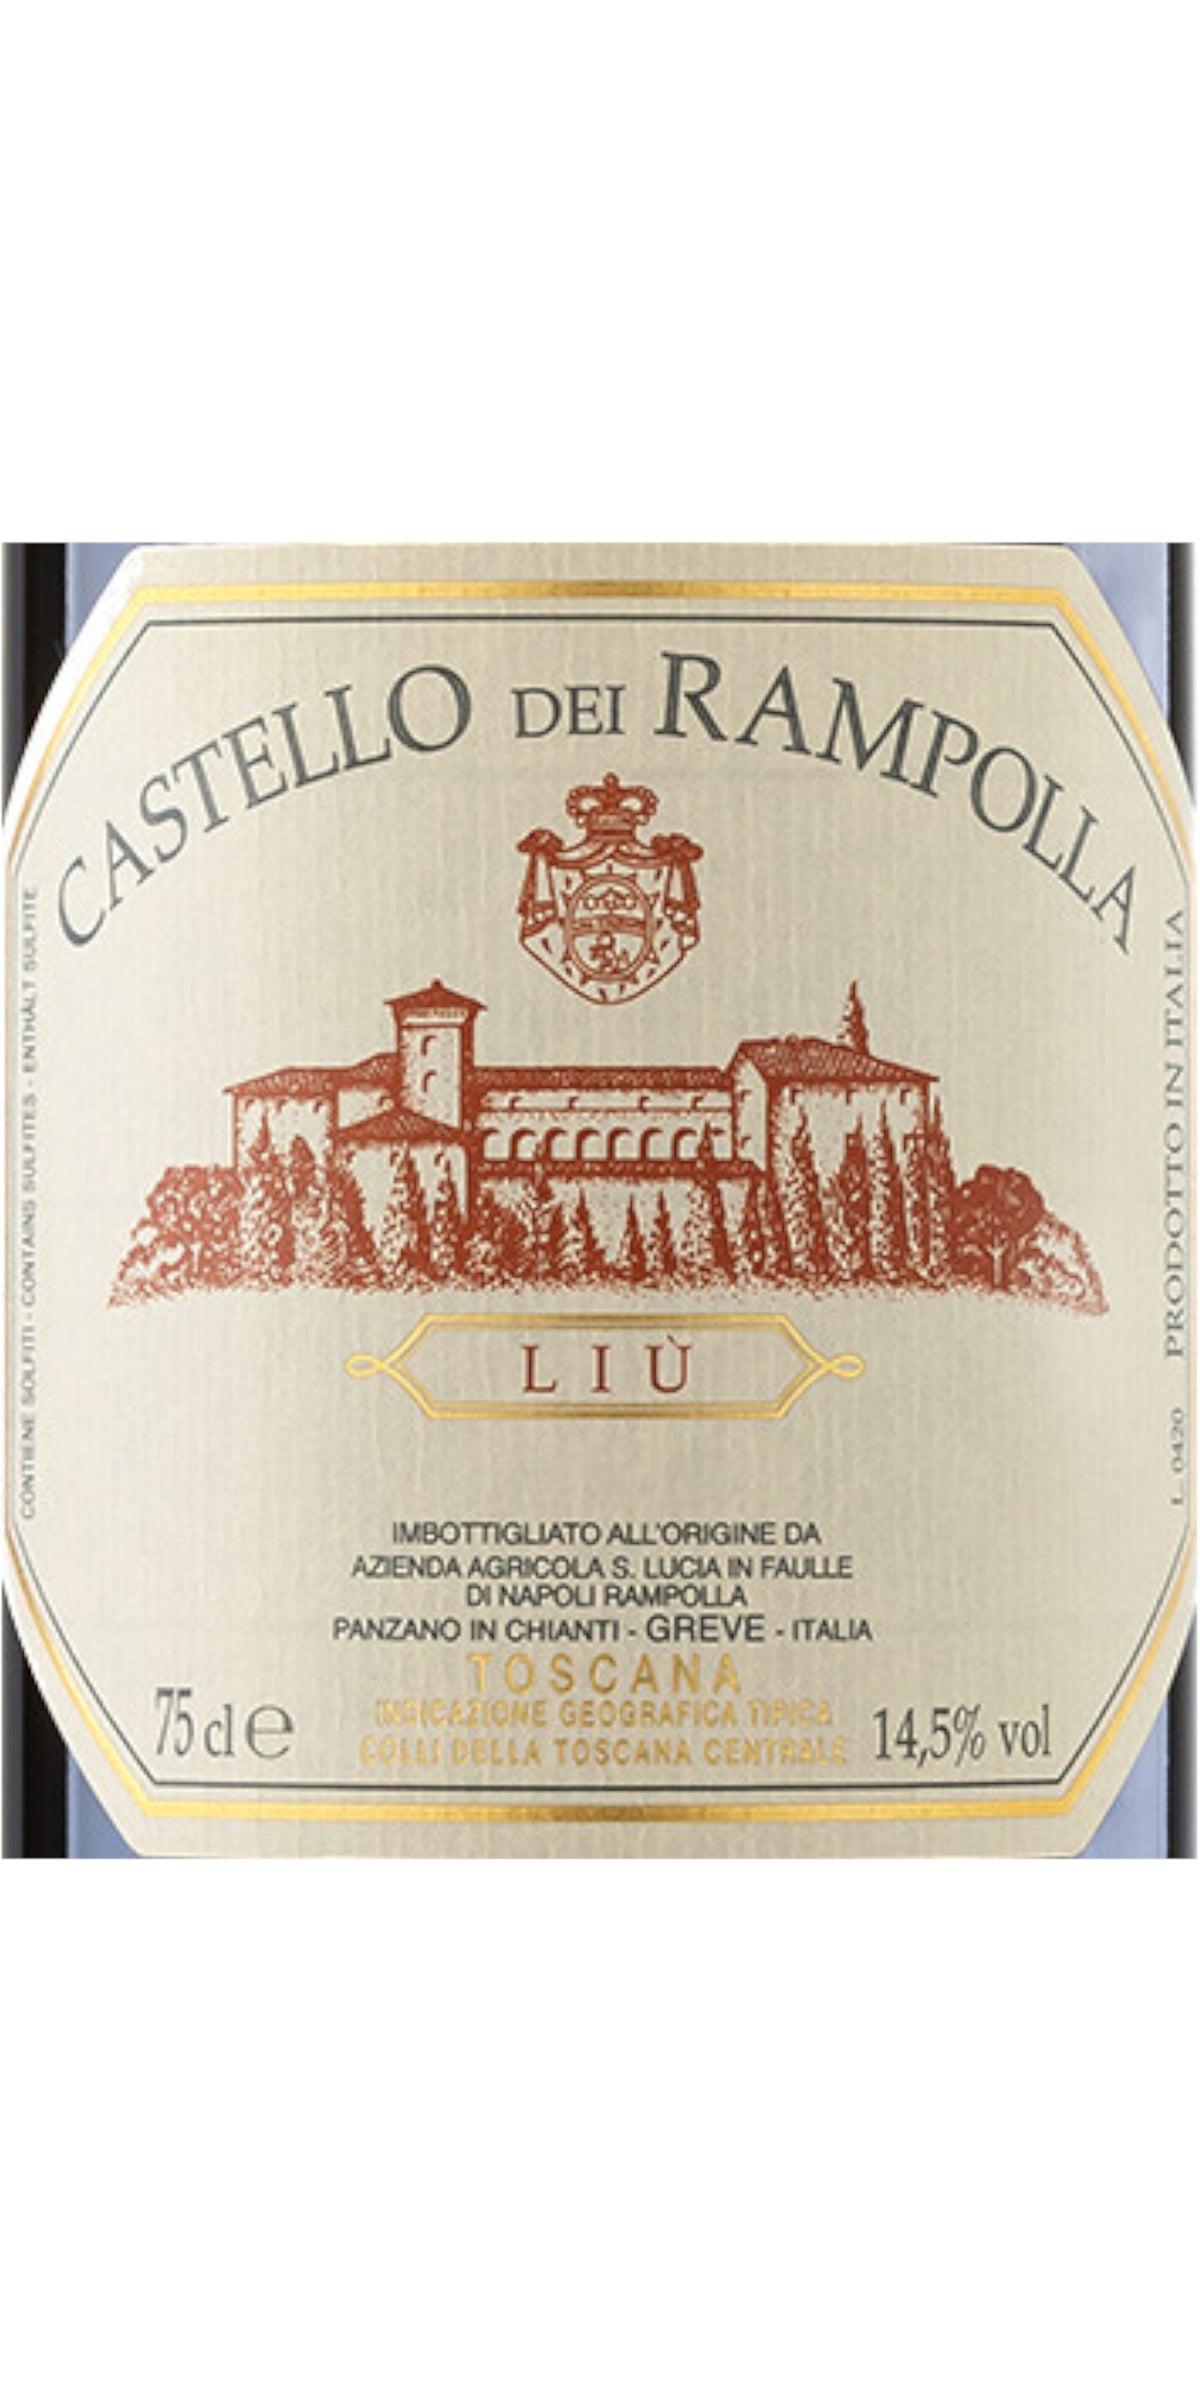 Castello dei Rampolla, Liu IGT, Tuscany 2019, 150cl